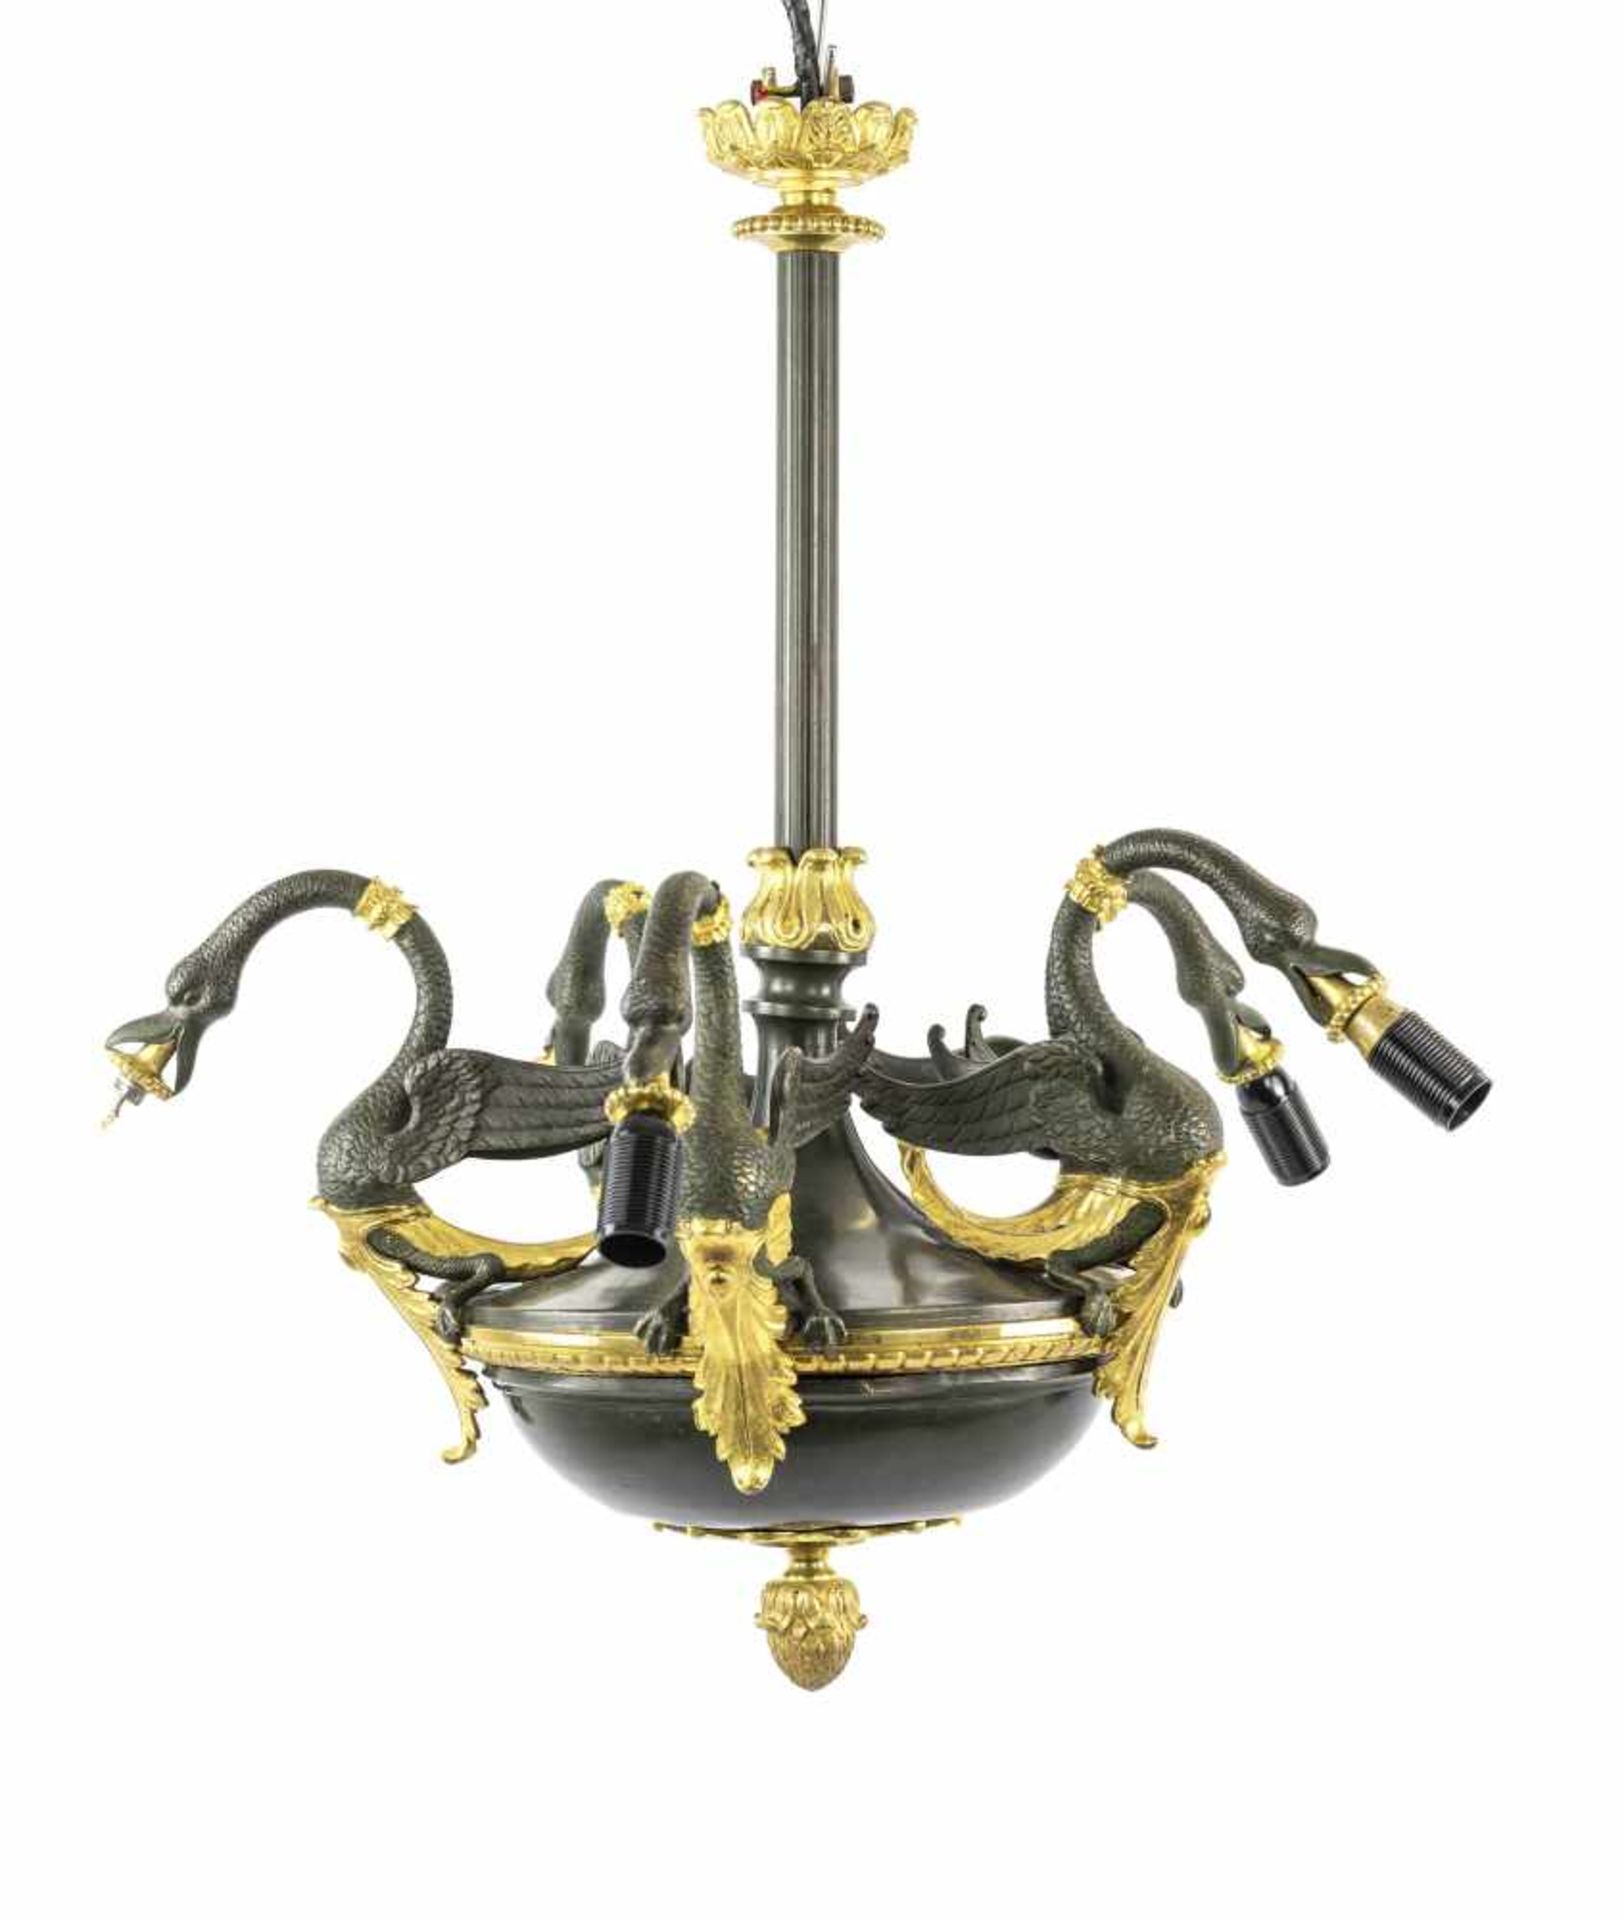 Kronleuchter Frankreich, Empirestil, Anfang 20. Jh., Bronze und Metall, partiell vergoldet, Höhe